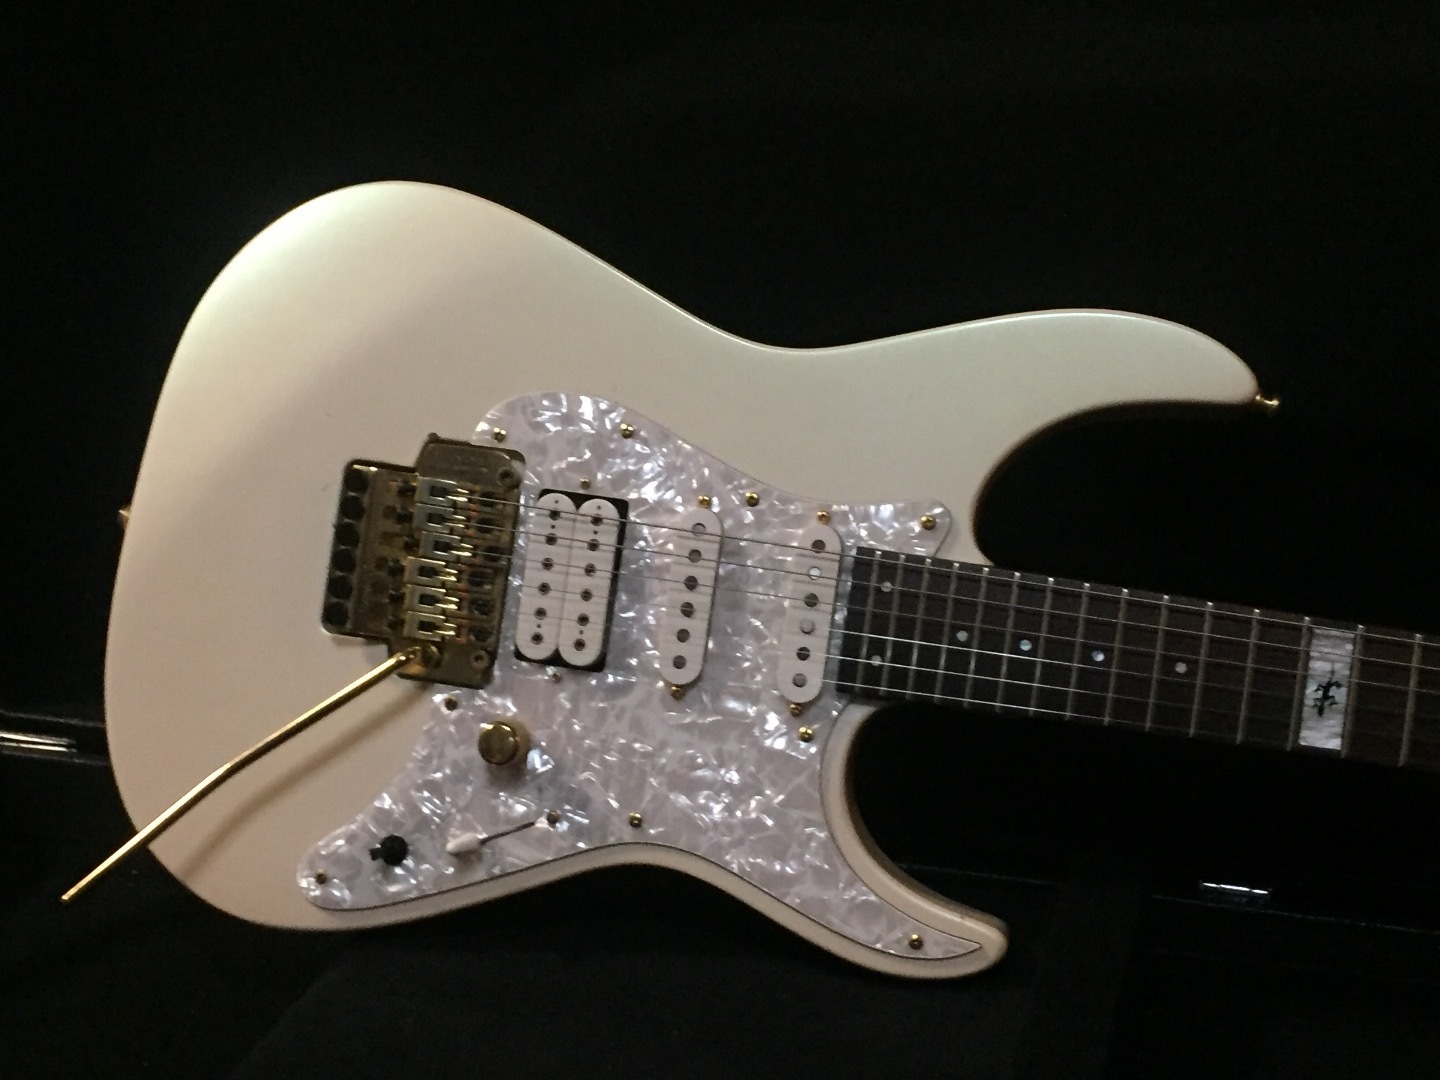 L90s Fernandes LA80KK / Pearl White: Guitars Land Seven